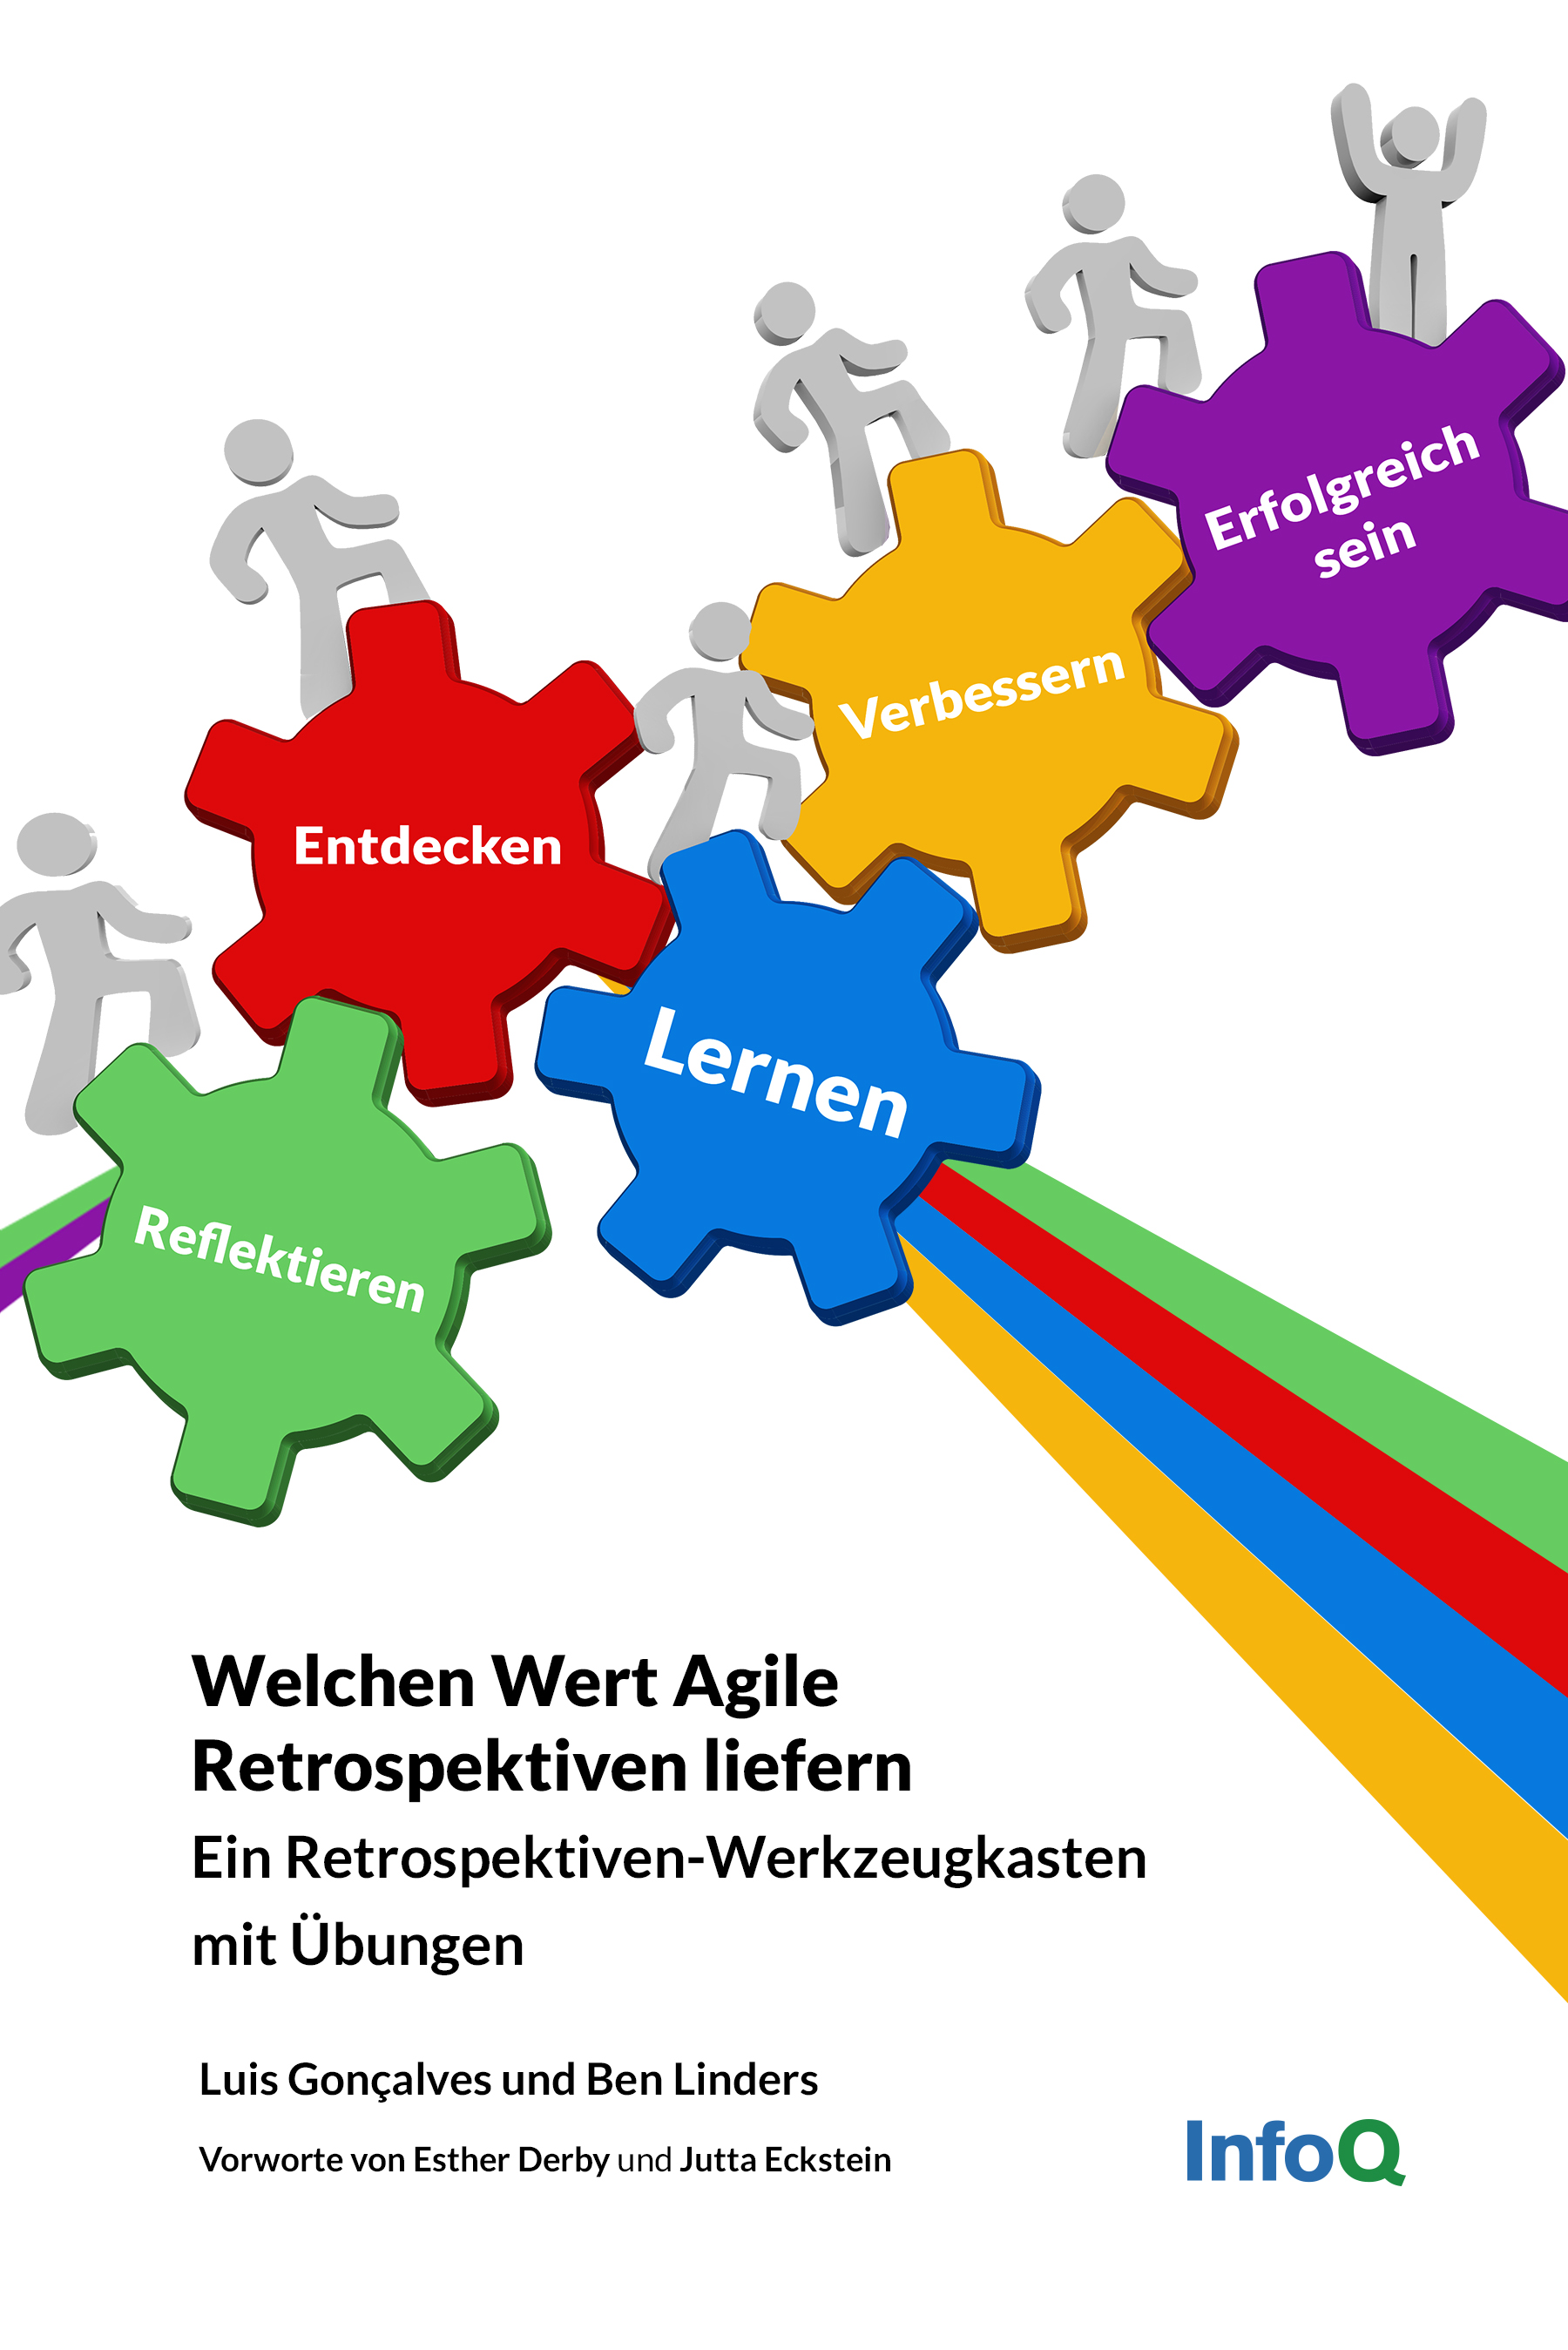 Retrospective Exercises in German: Welchen Wert Agile Retrospektiven liefern